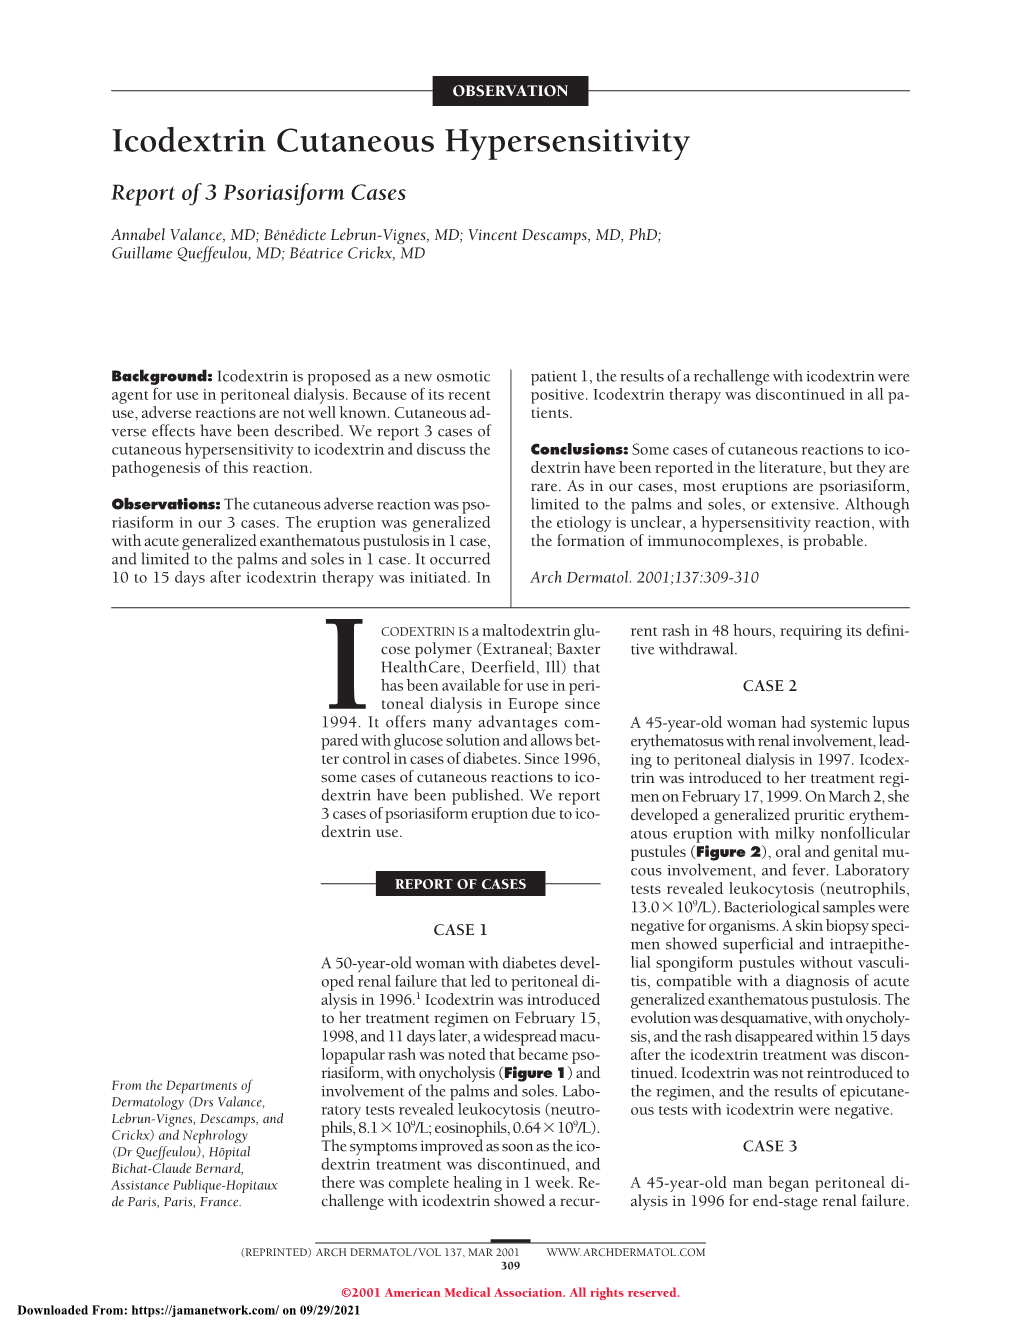 Icodextrin Cutaneous Hypersensitivity Report of 3 Psoriasiform Cases